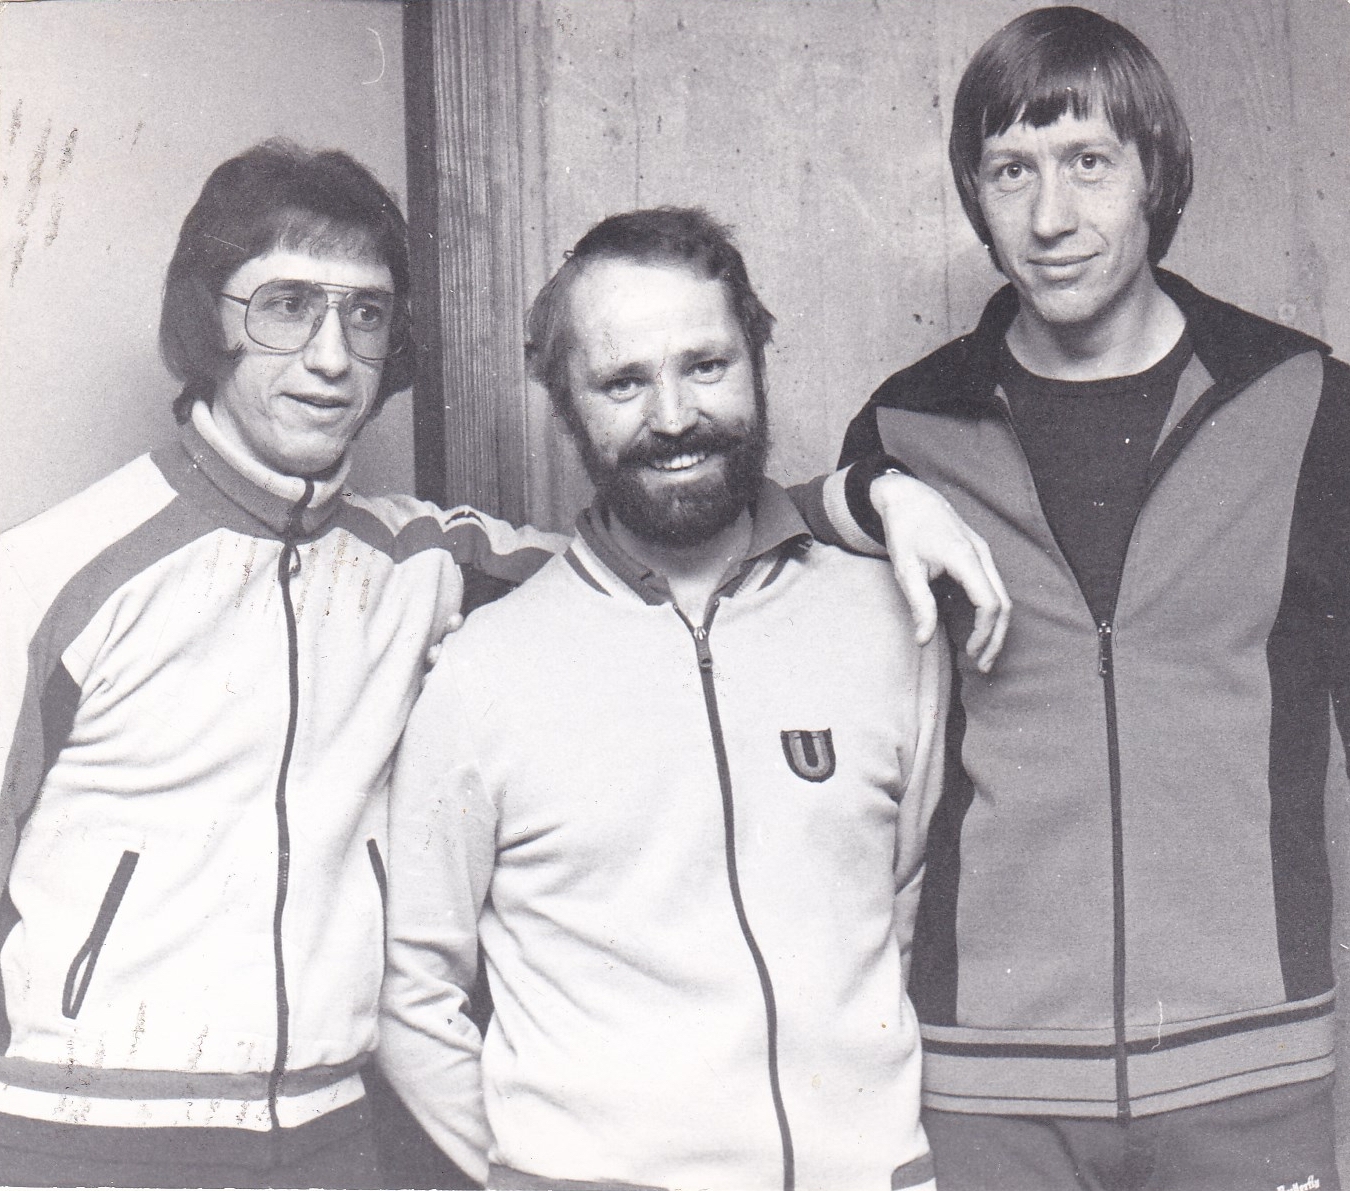 Herren 1 Pokal 1979/80. Von links: Bacher, Klugmann, P. Müller